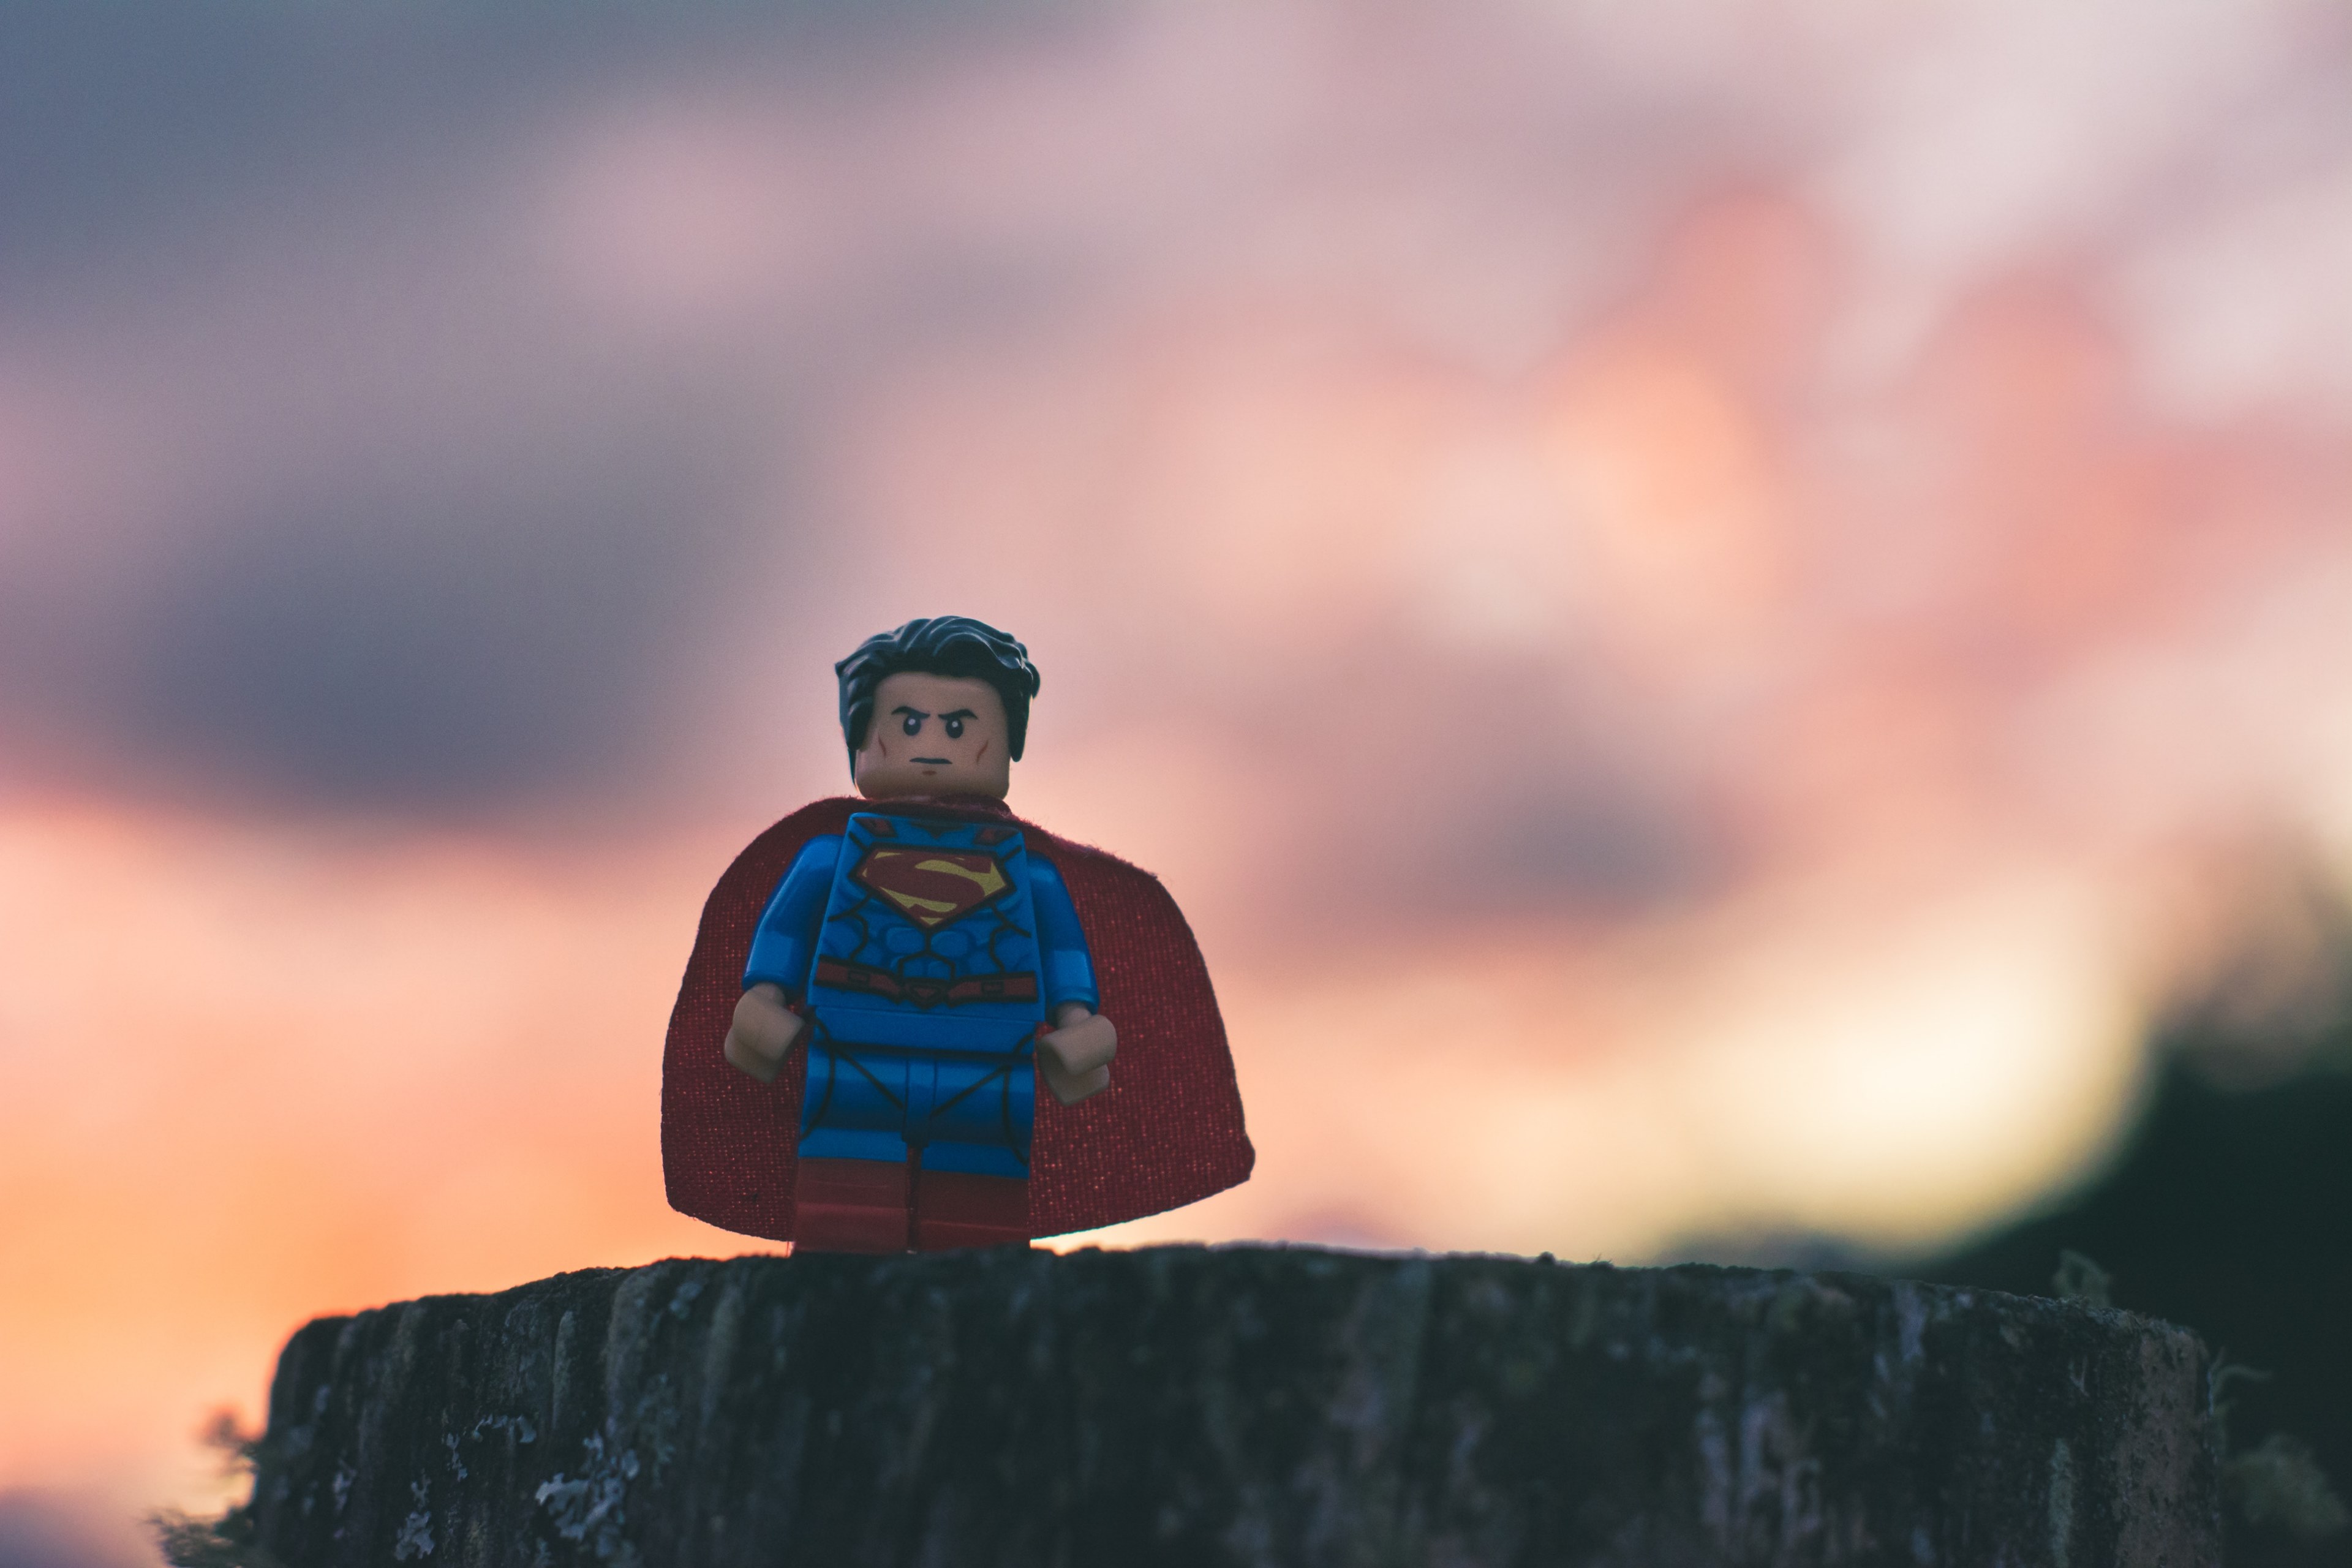 Wallpaper / superman lego minifigure and tree HD 4k wallpaper